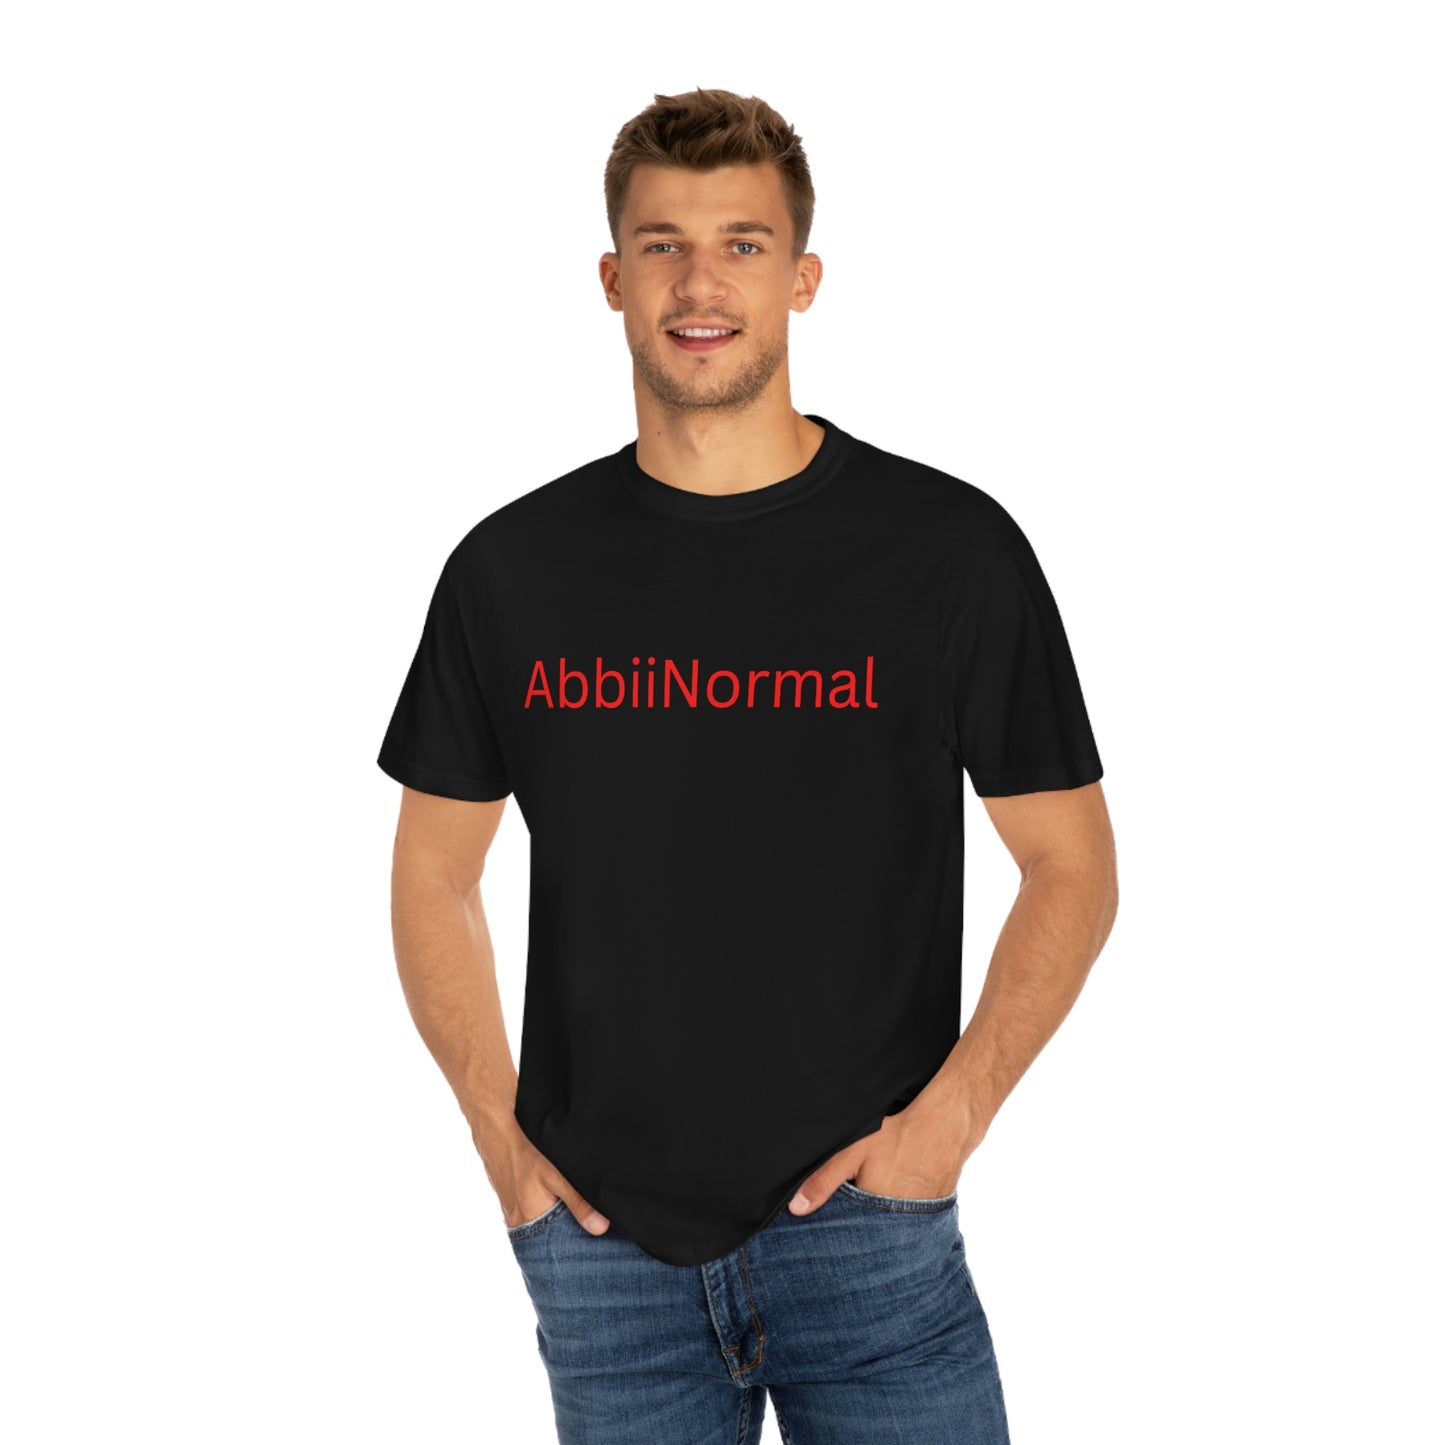 Abbii Normal Unisex Garment-Dyed T-shirt